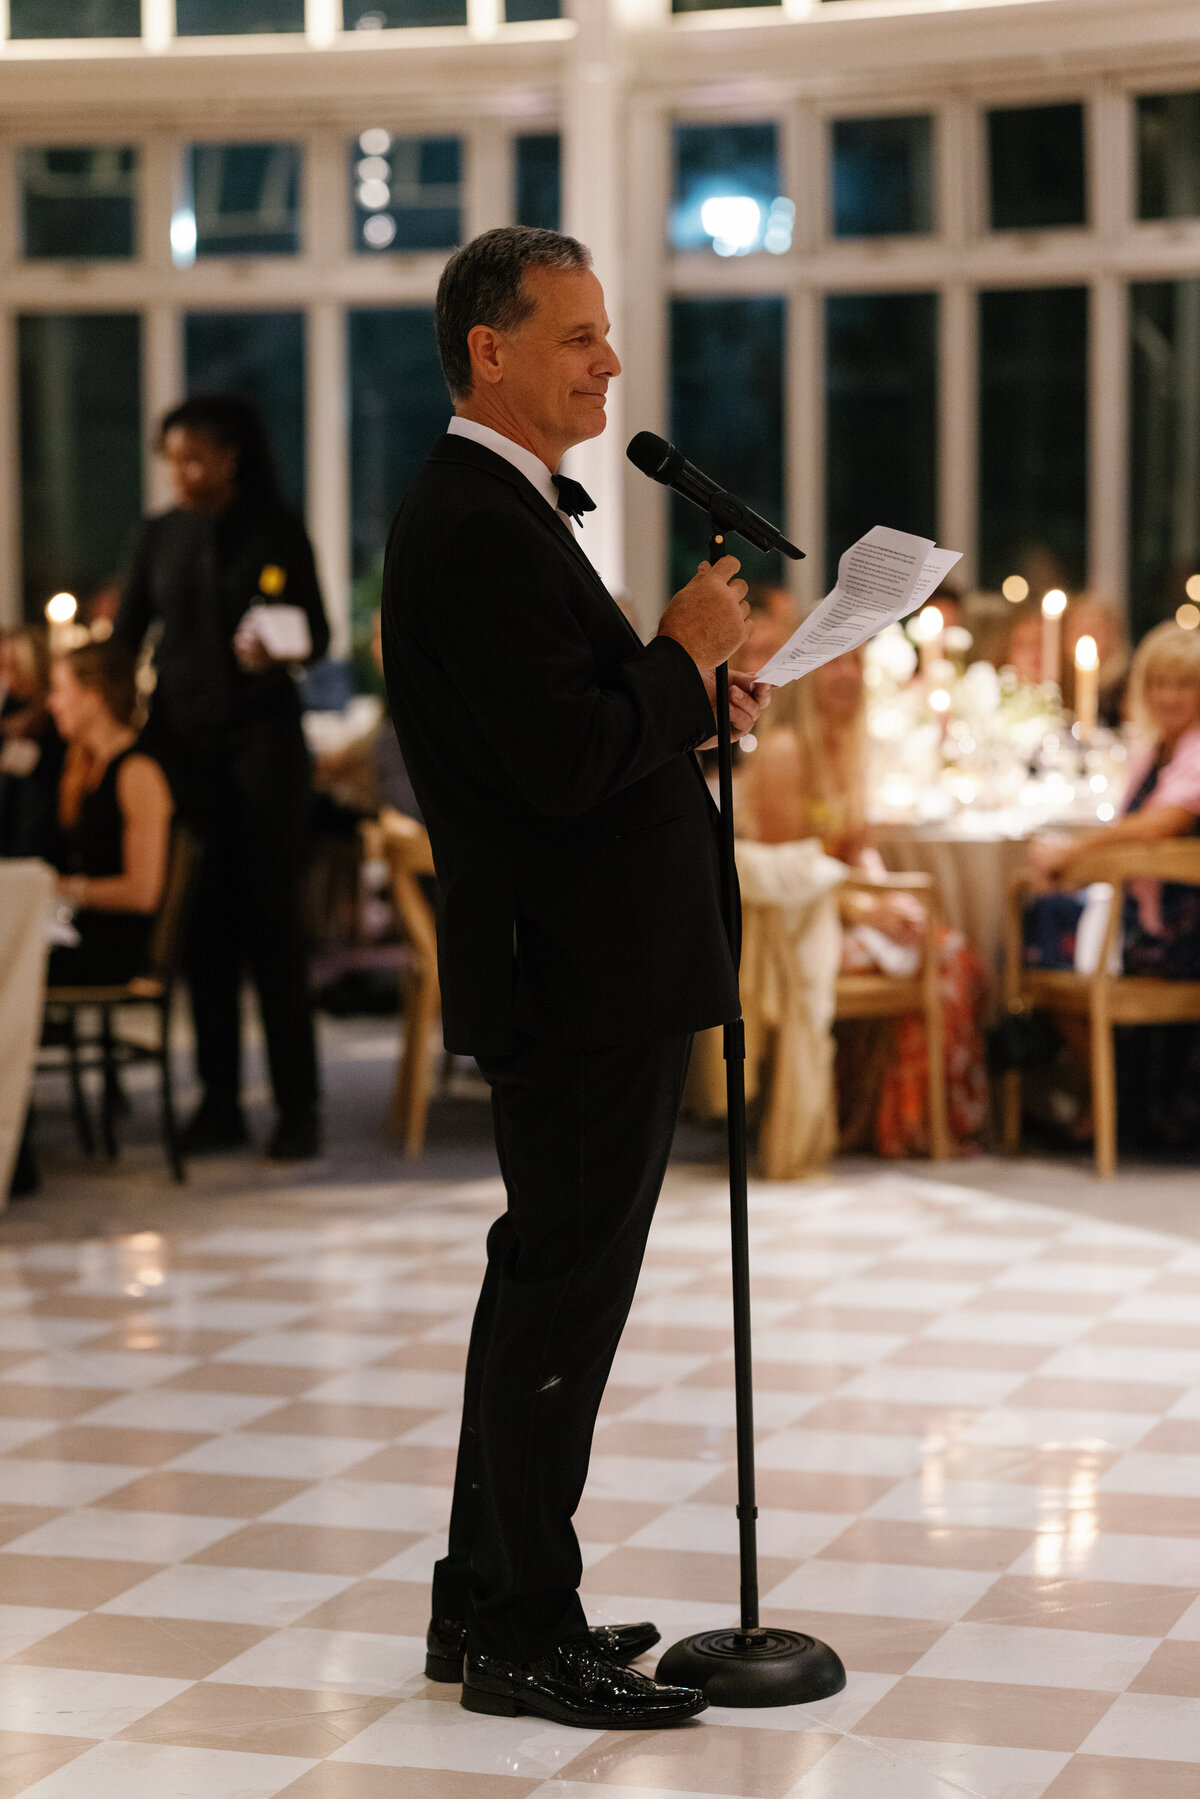 brooklyn-wedding-reception-custom-dance-floor-wrap-father-of-groom-speech-sarah-brehant-events